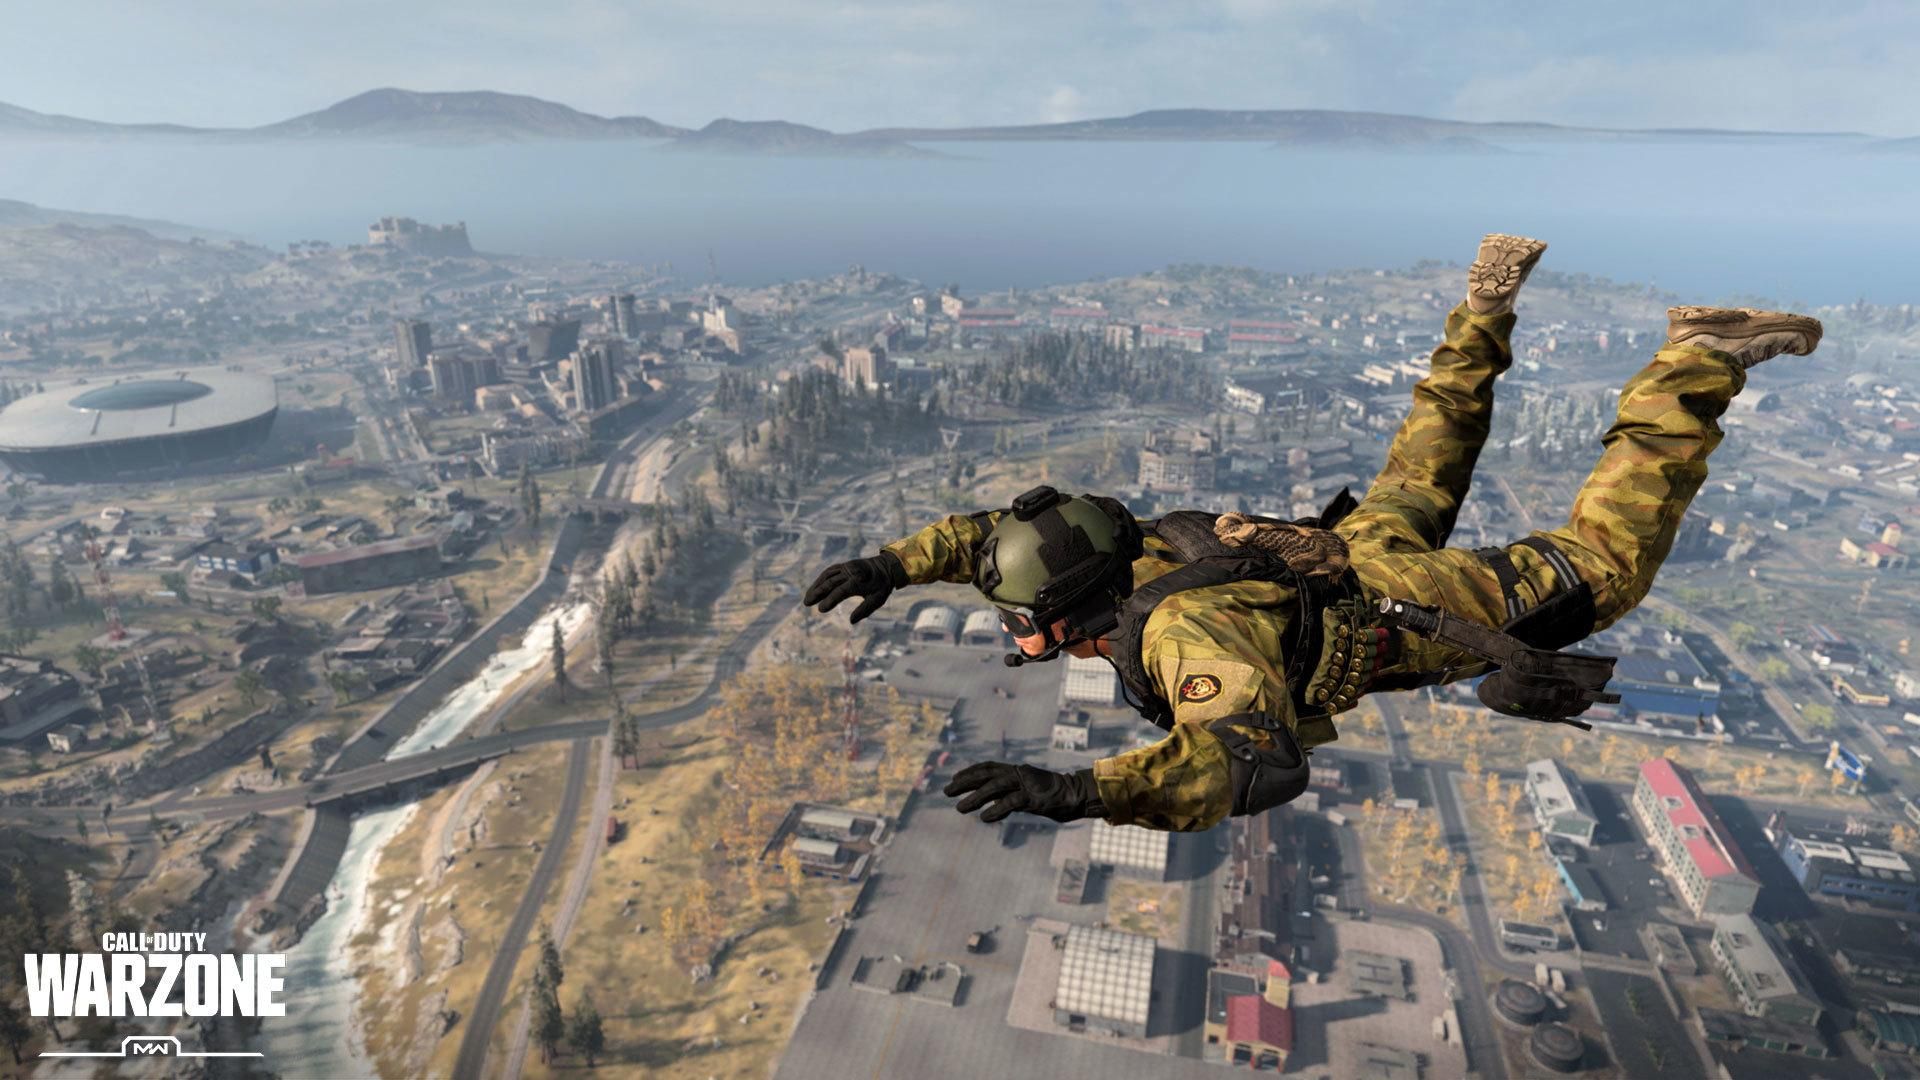 Гравець-пацифіст виграв матч у Call of Duty: Warzone